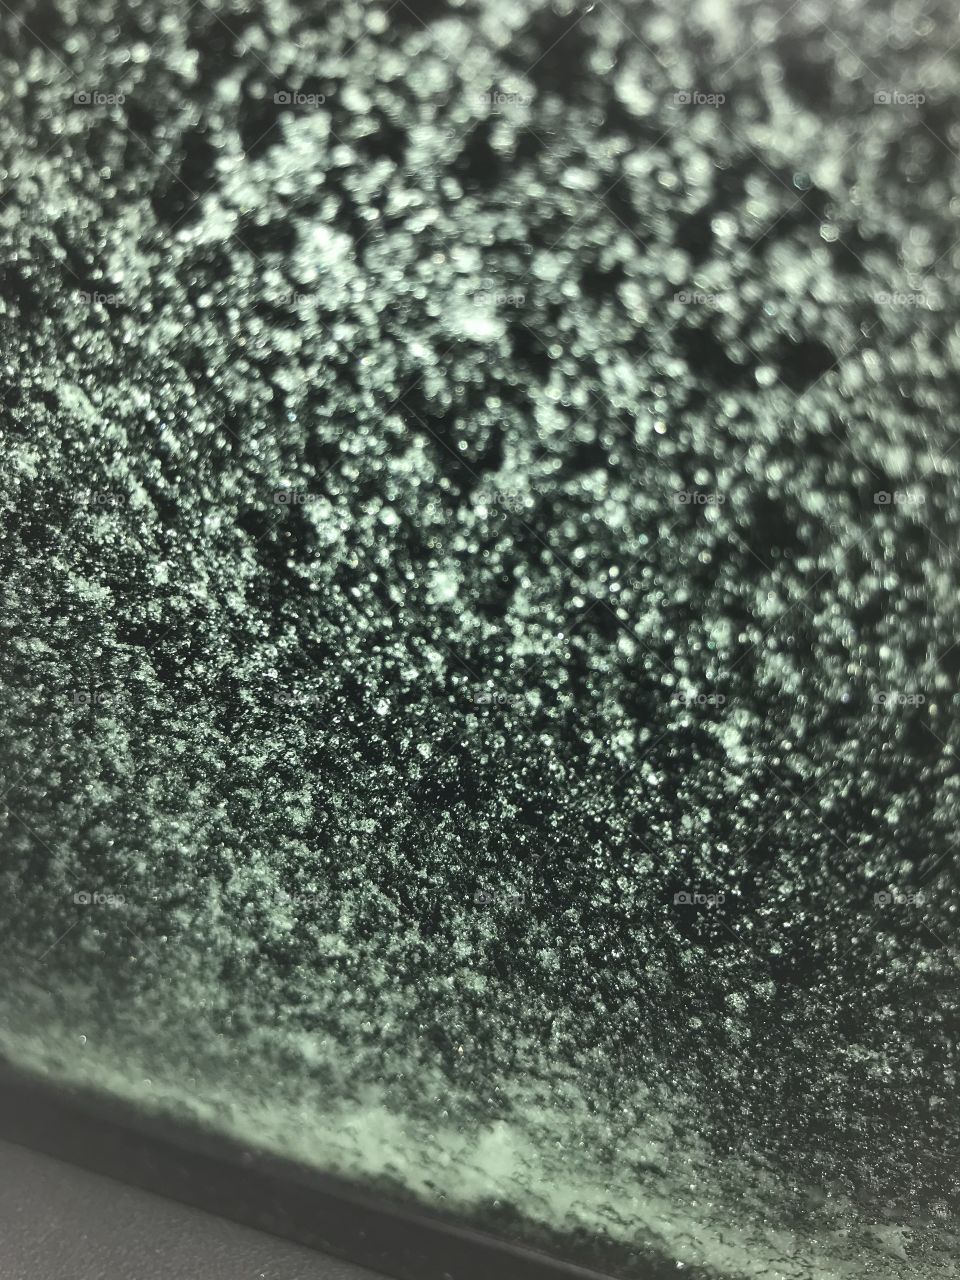 Frost on a car window in Norway.                                                  